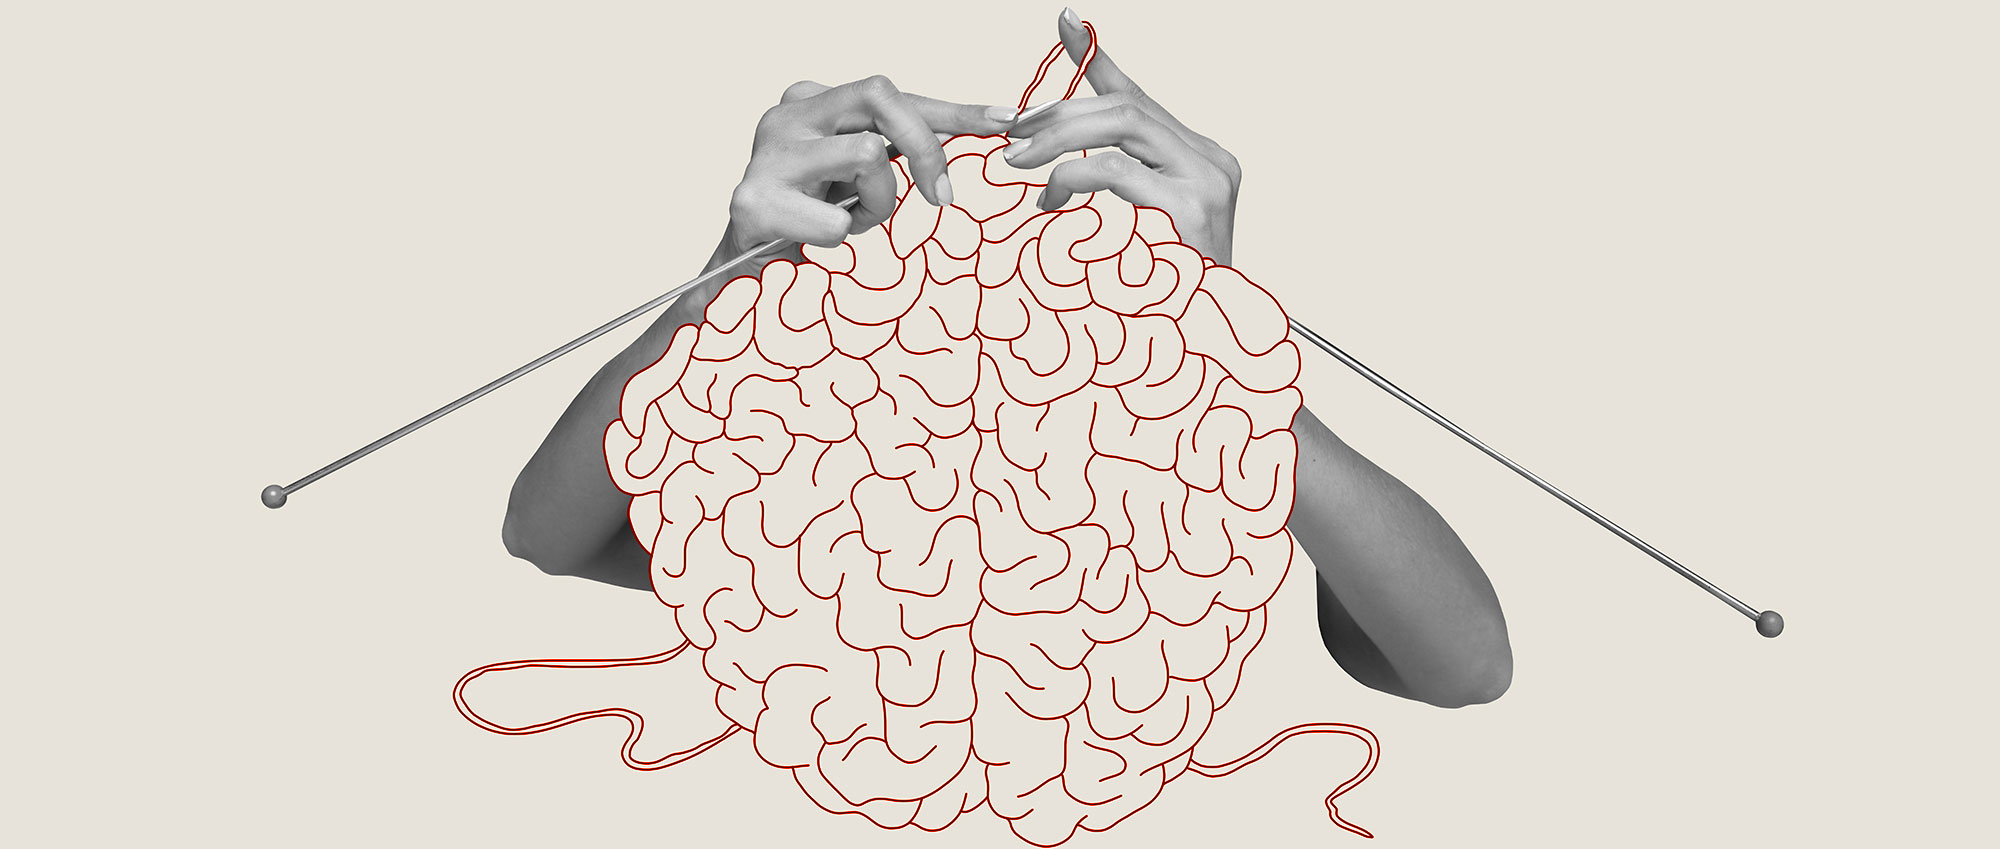 knitting a brain